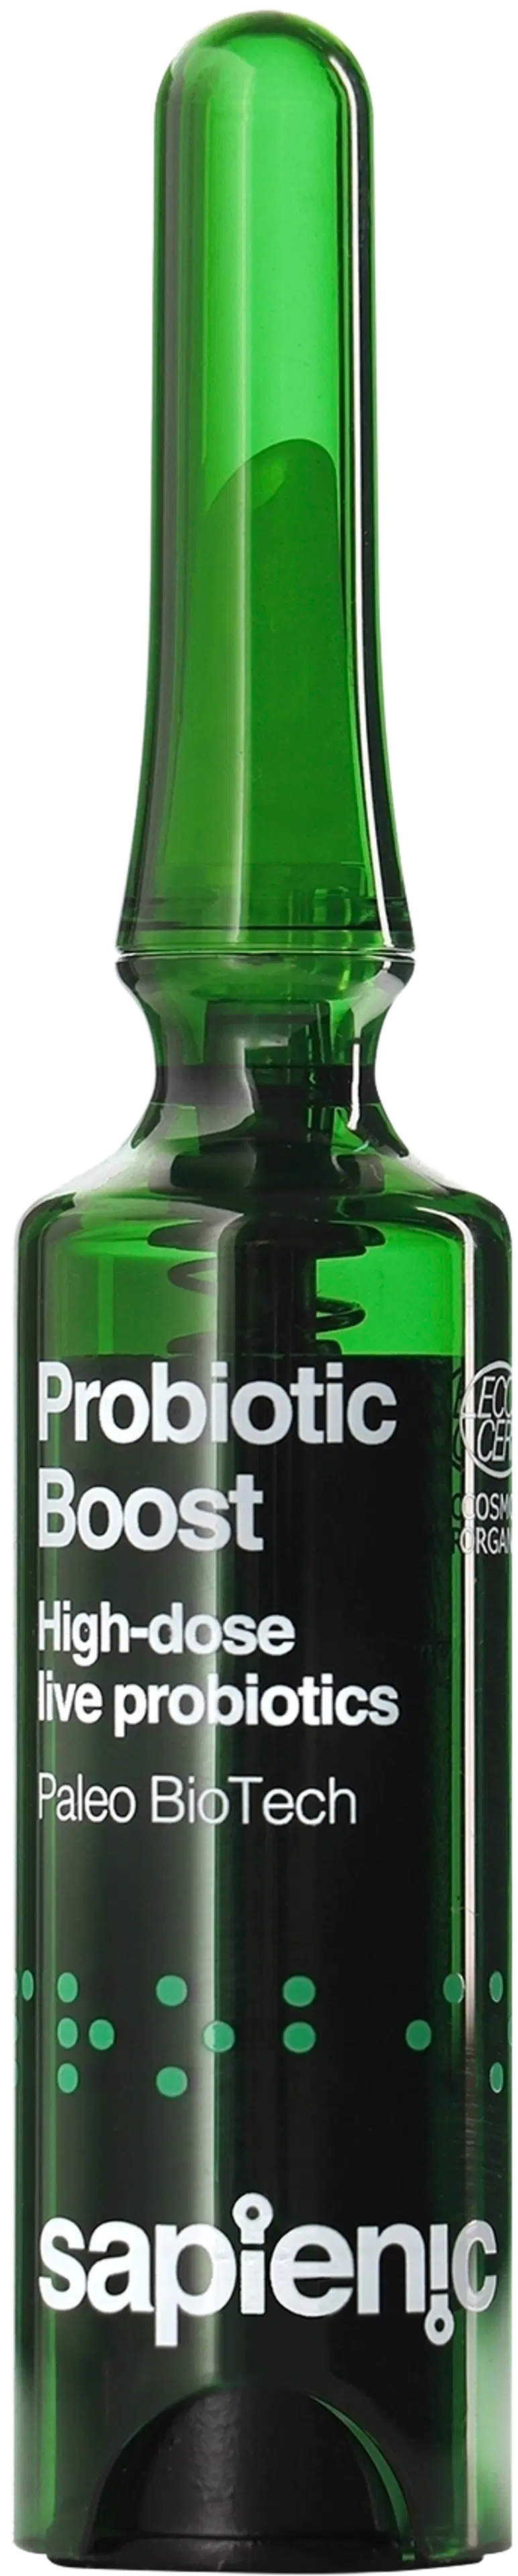 Sapienic Probiotic Boost 3x4ml